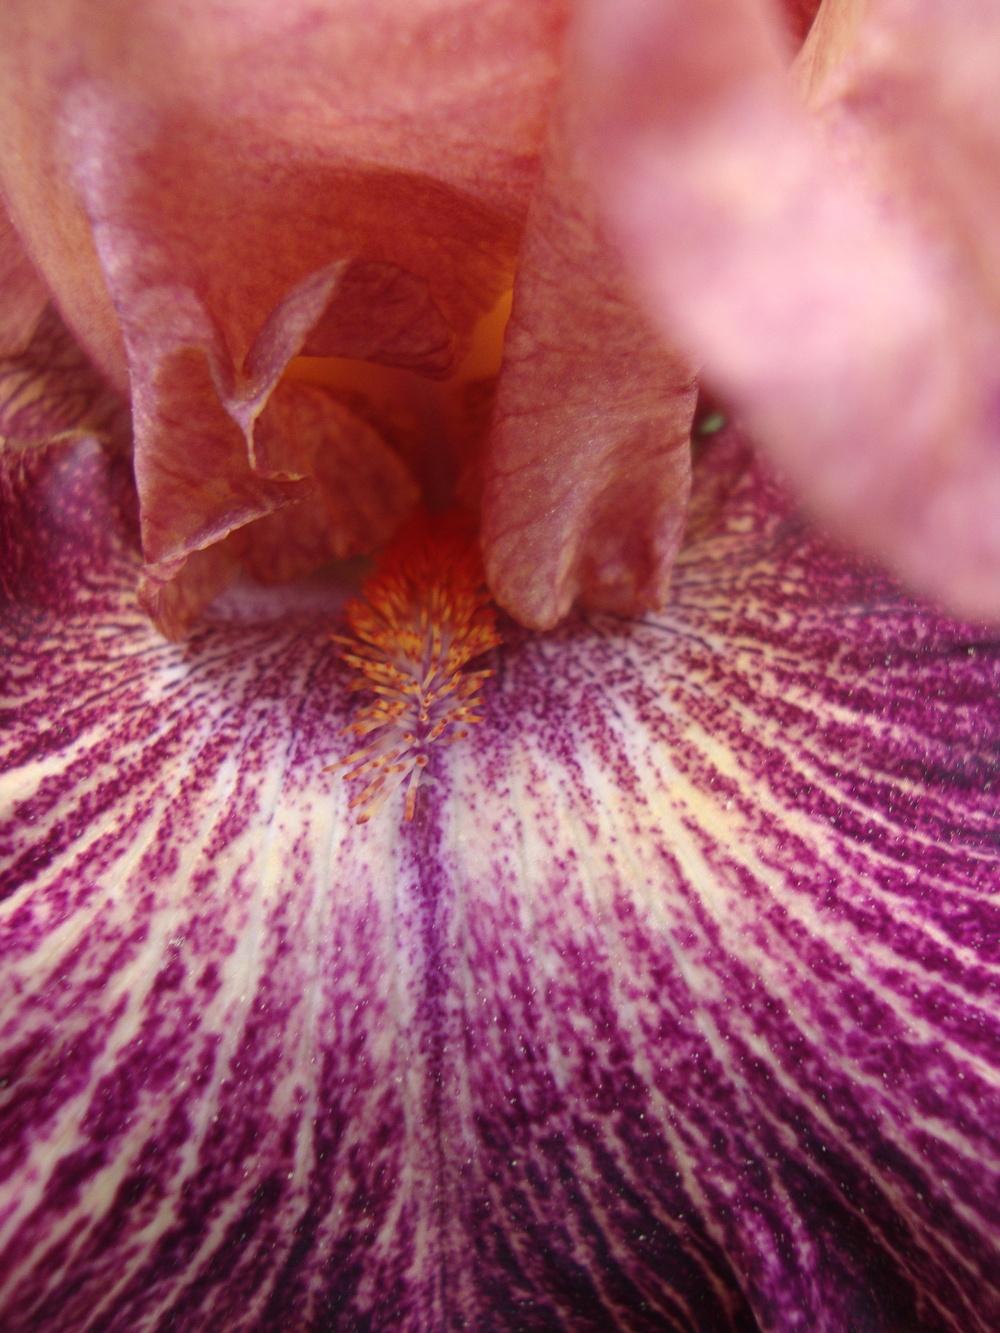 Photo of Tall Bearded Iris (Iris 'Artistic Web') uploaded by Paul2032